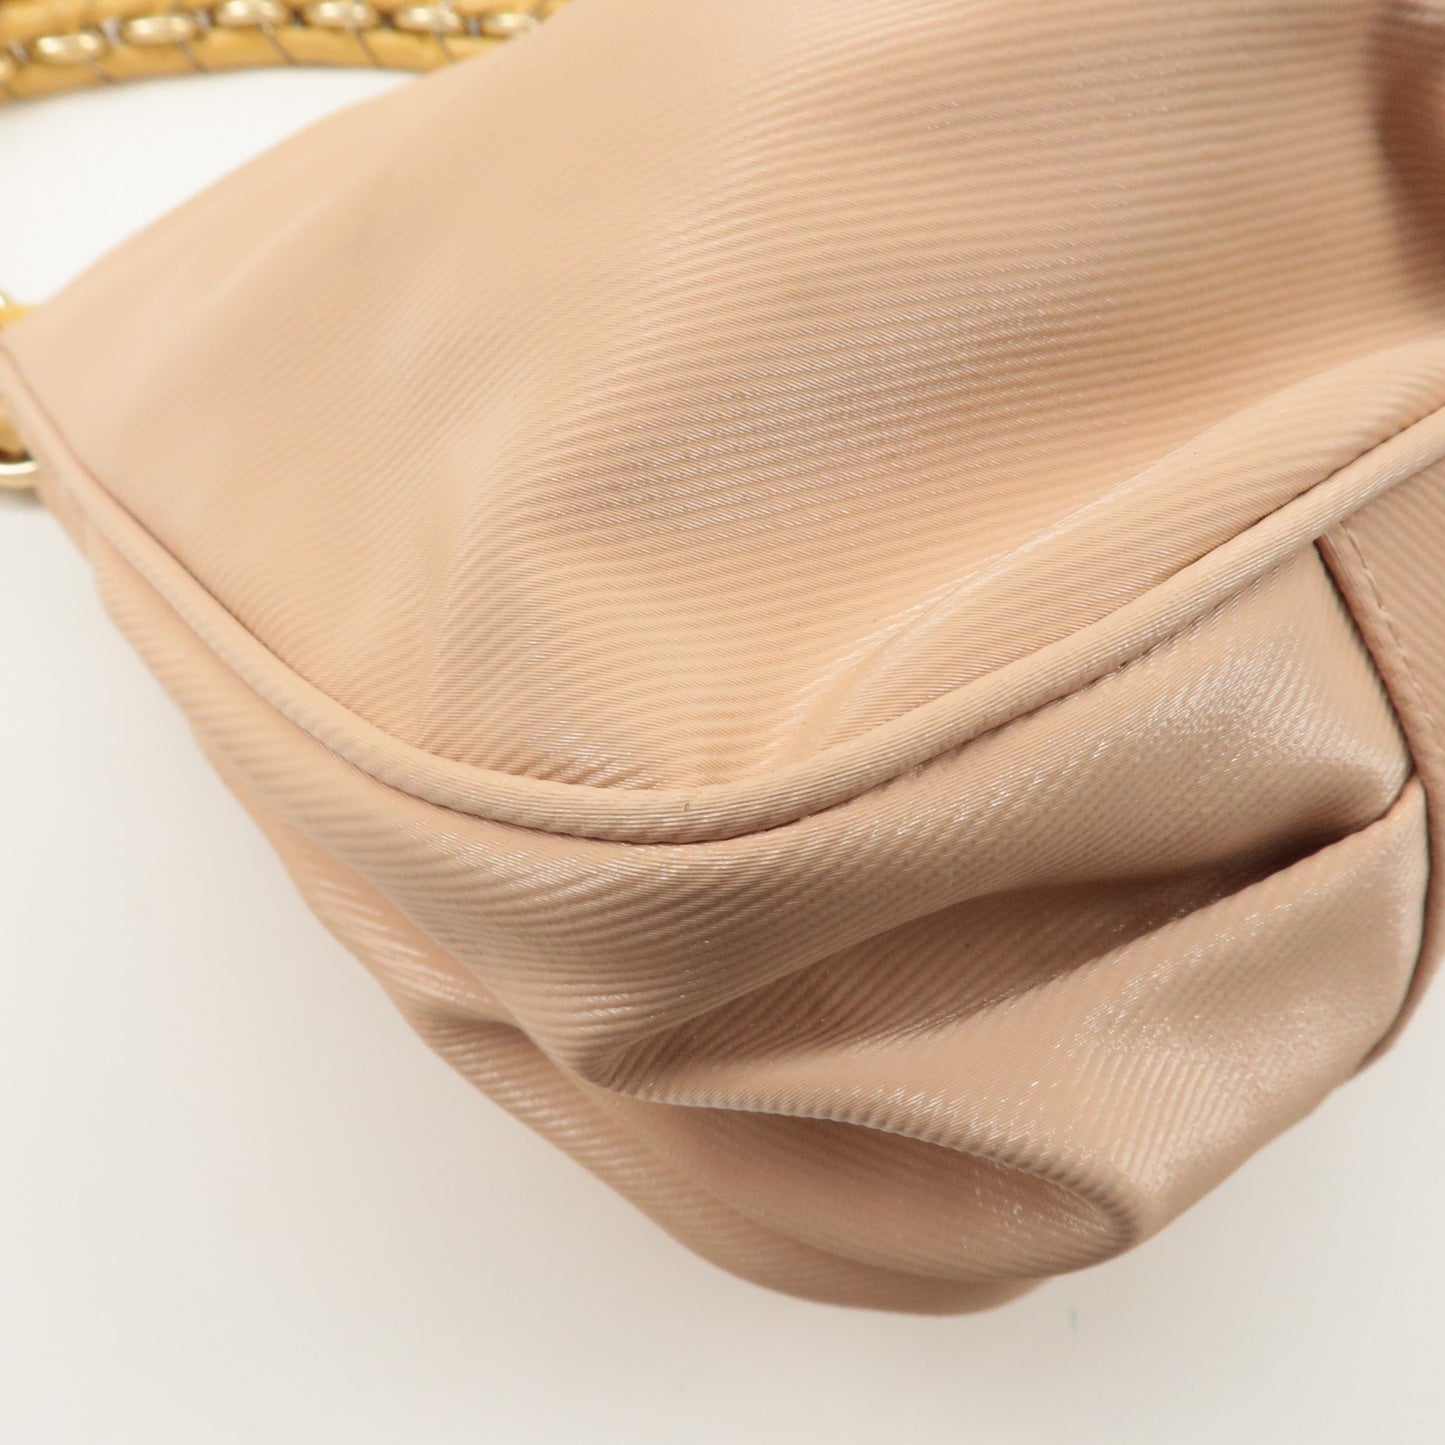 FENDI Nylon Enamel Hand Bag Pink Beige 8BR615